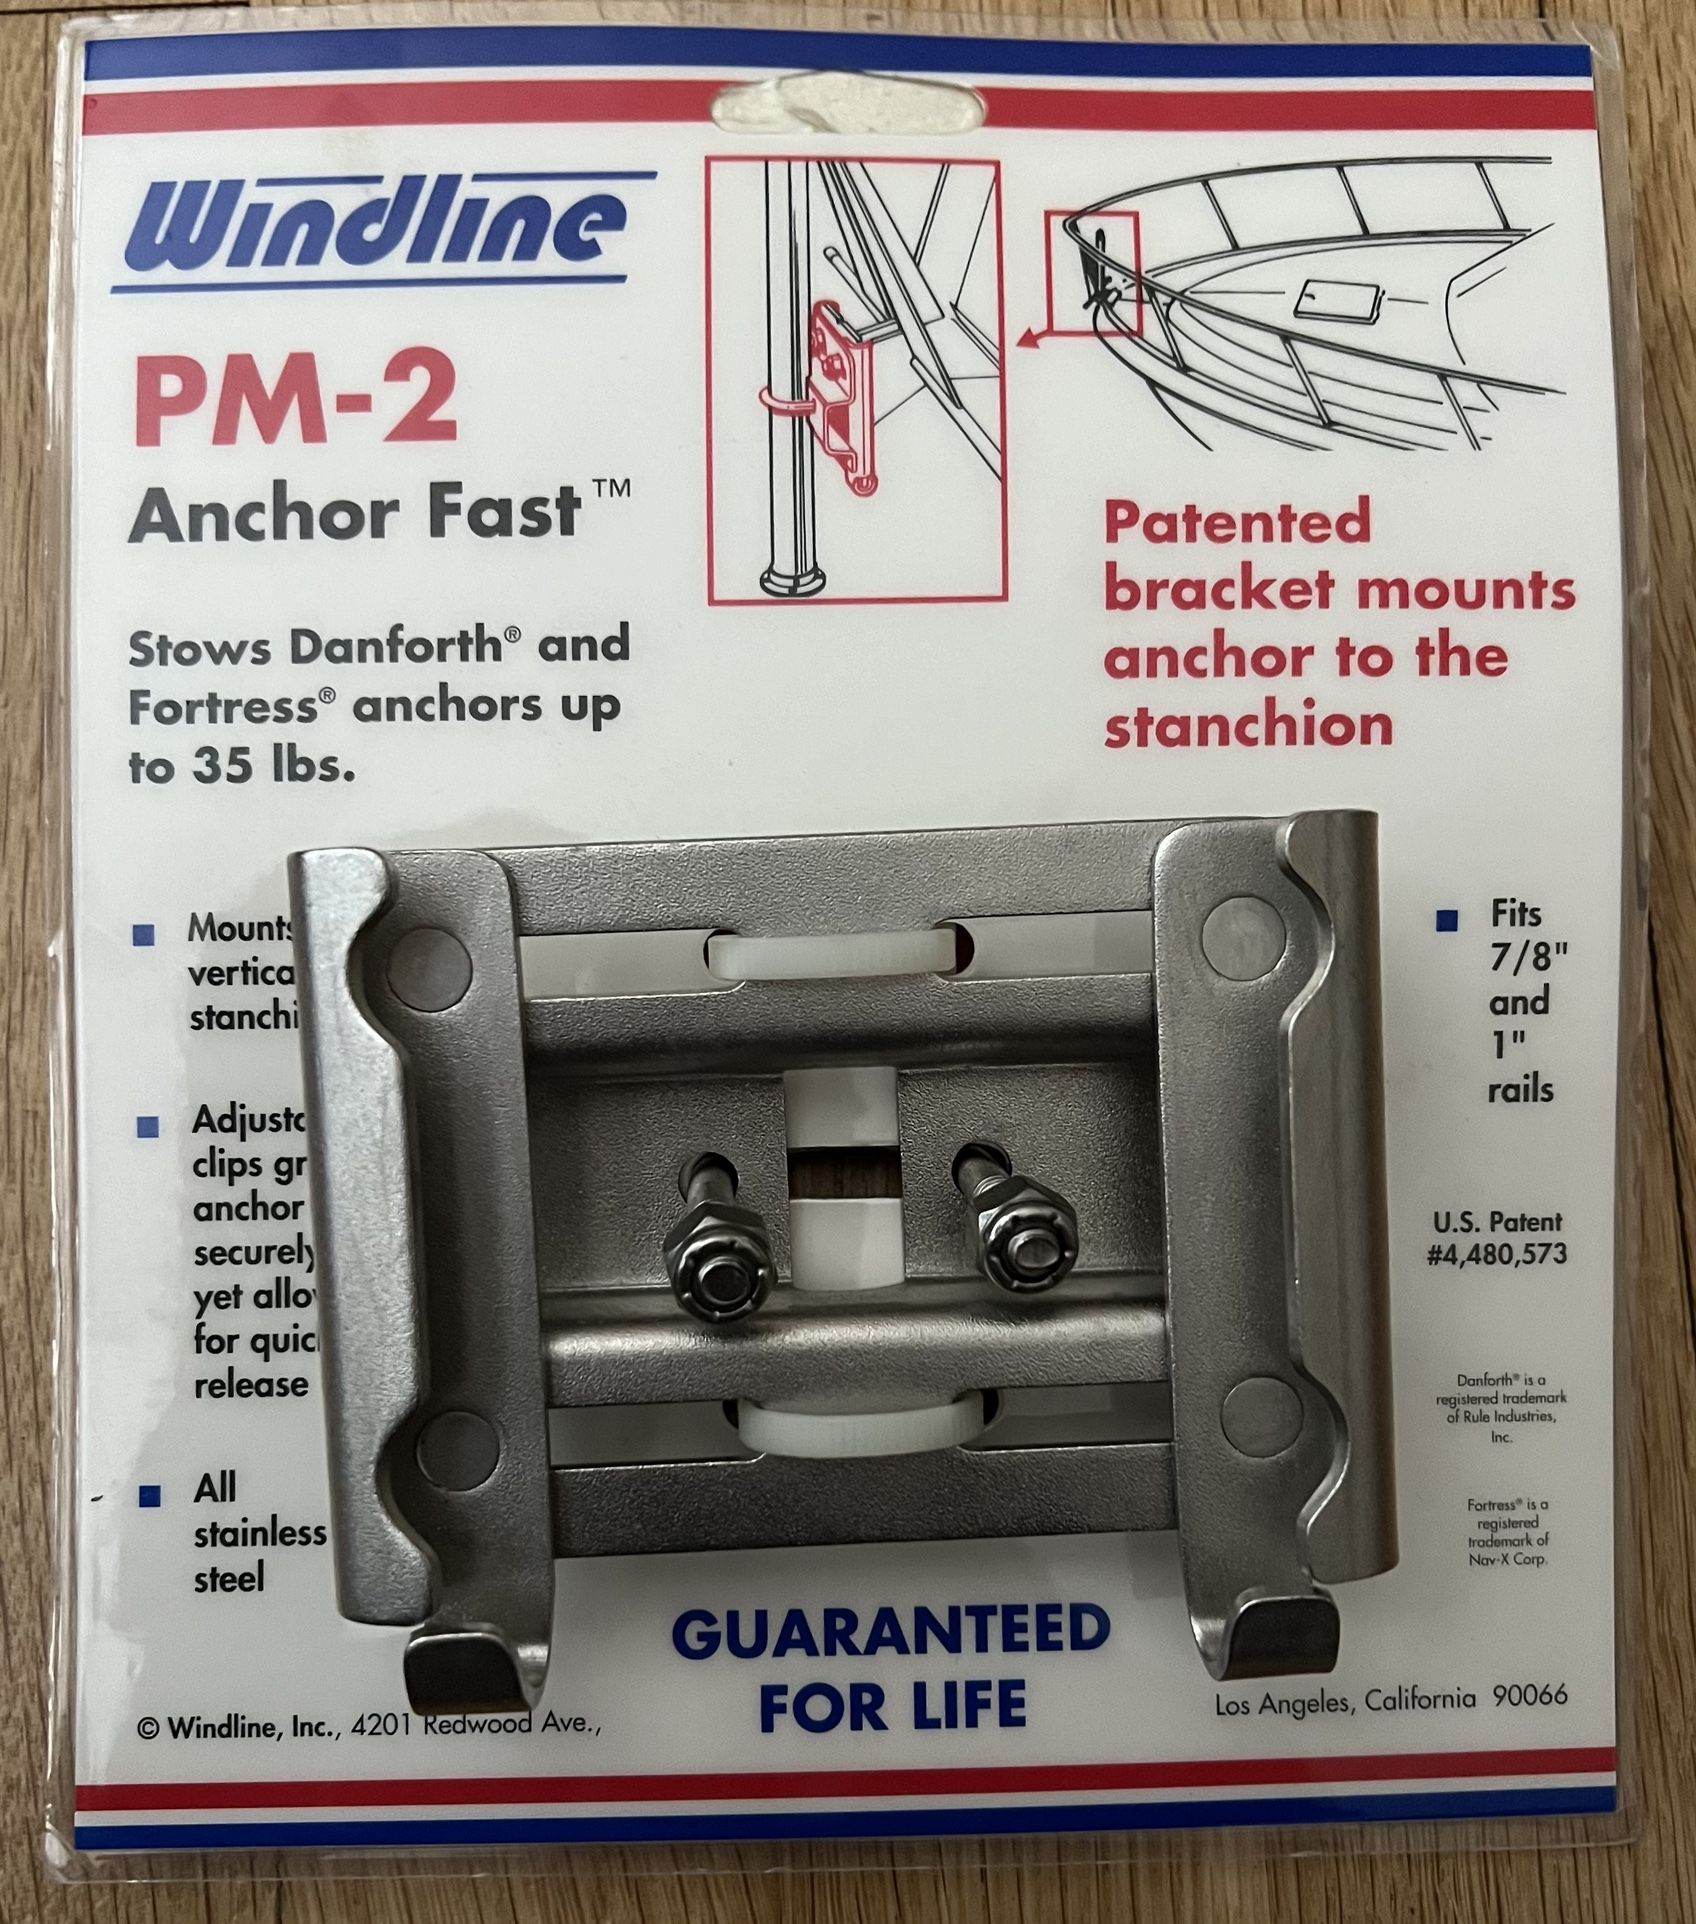 Windline PM-2 Anchor Fast